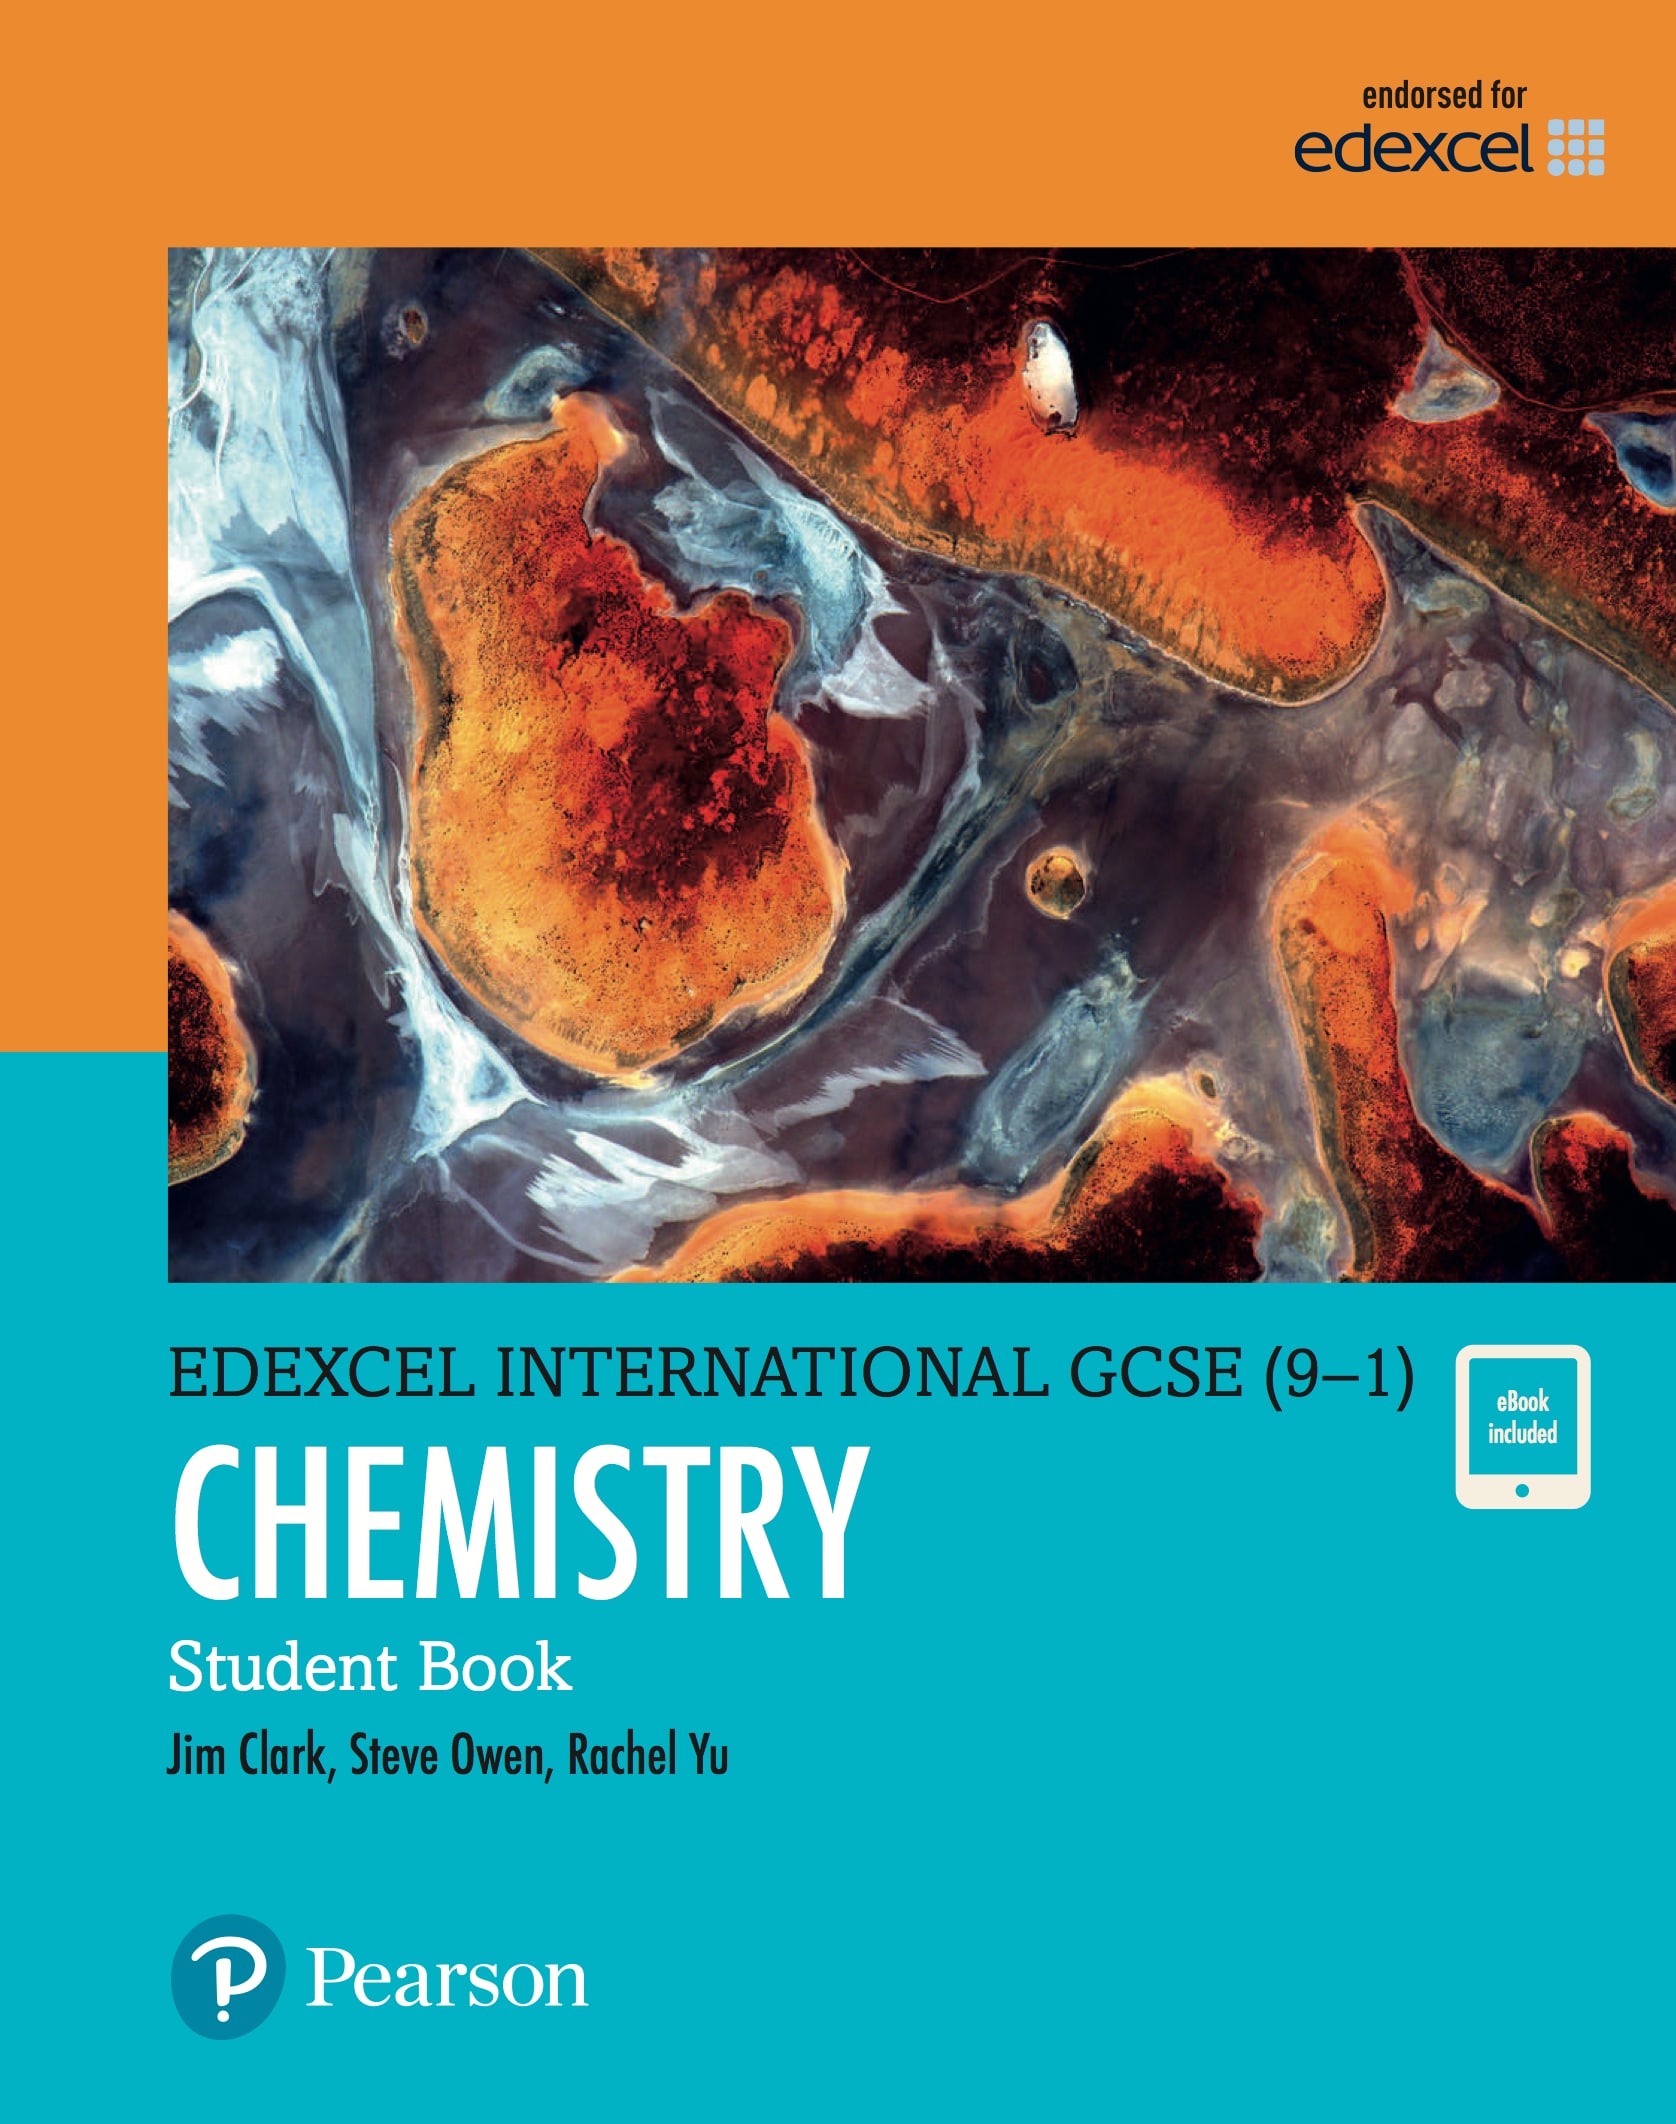 Chemistry Student Book sample